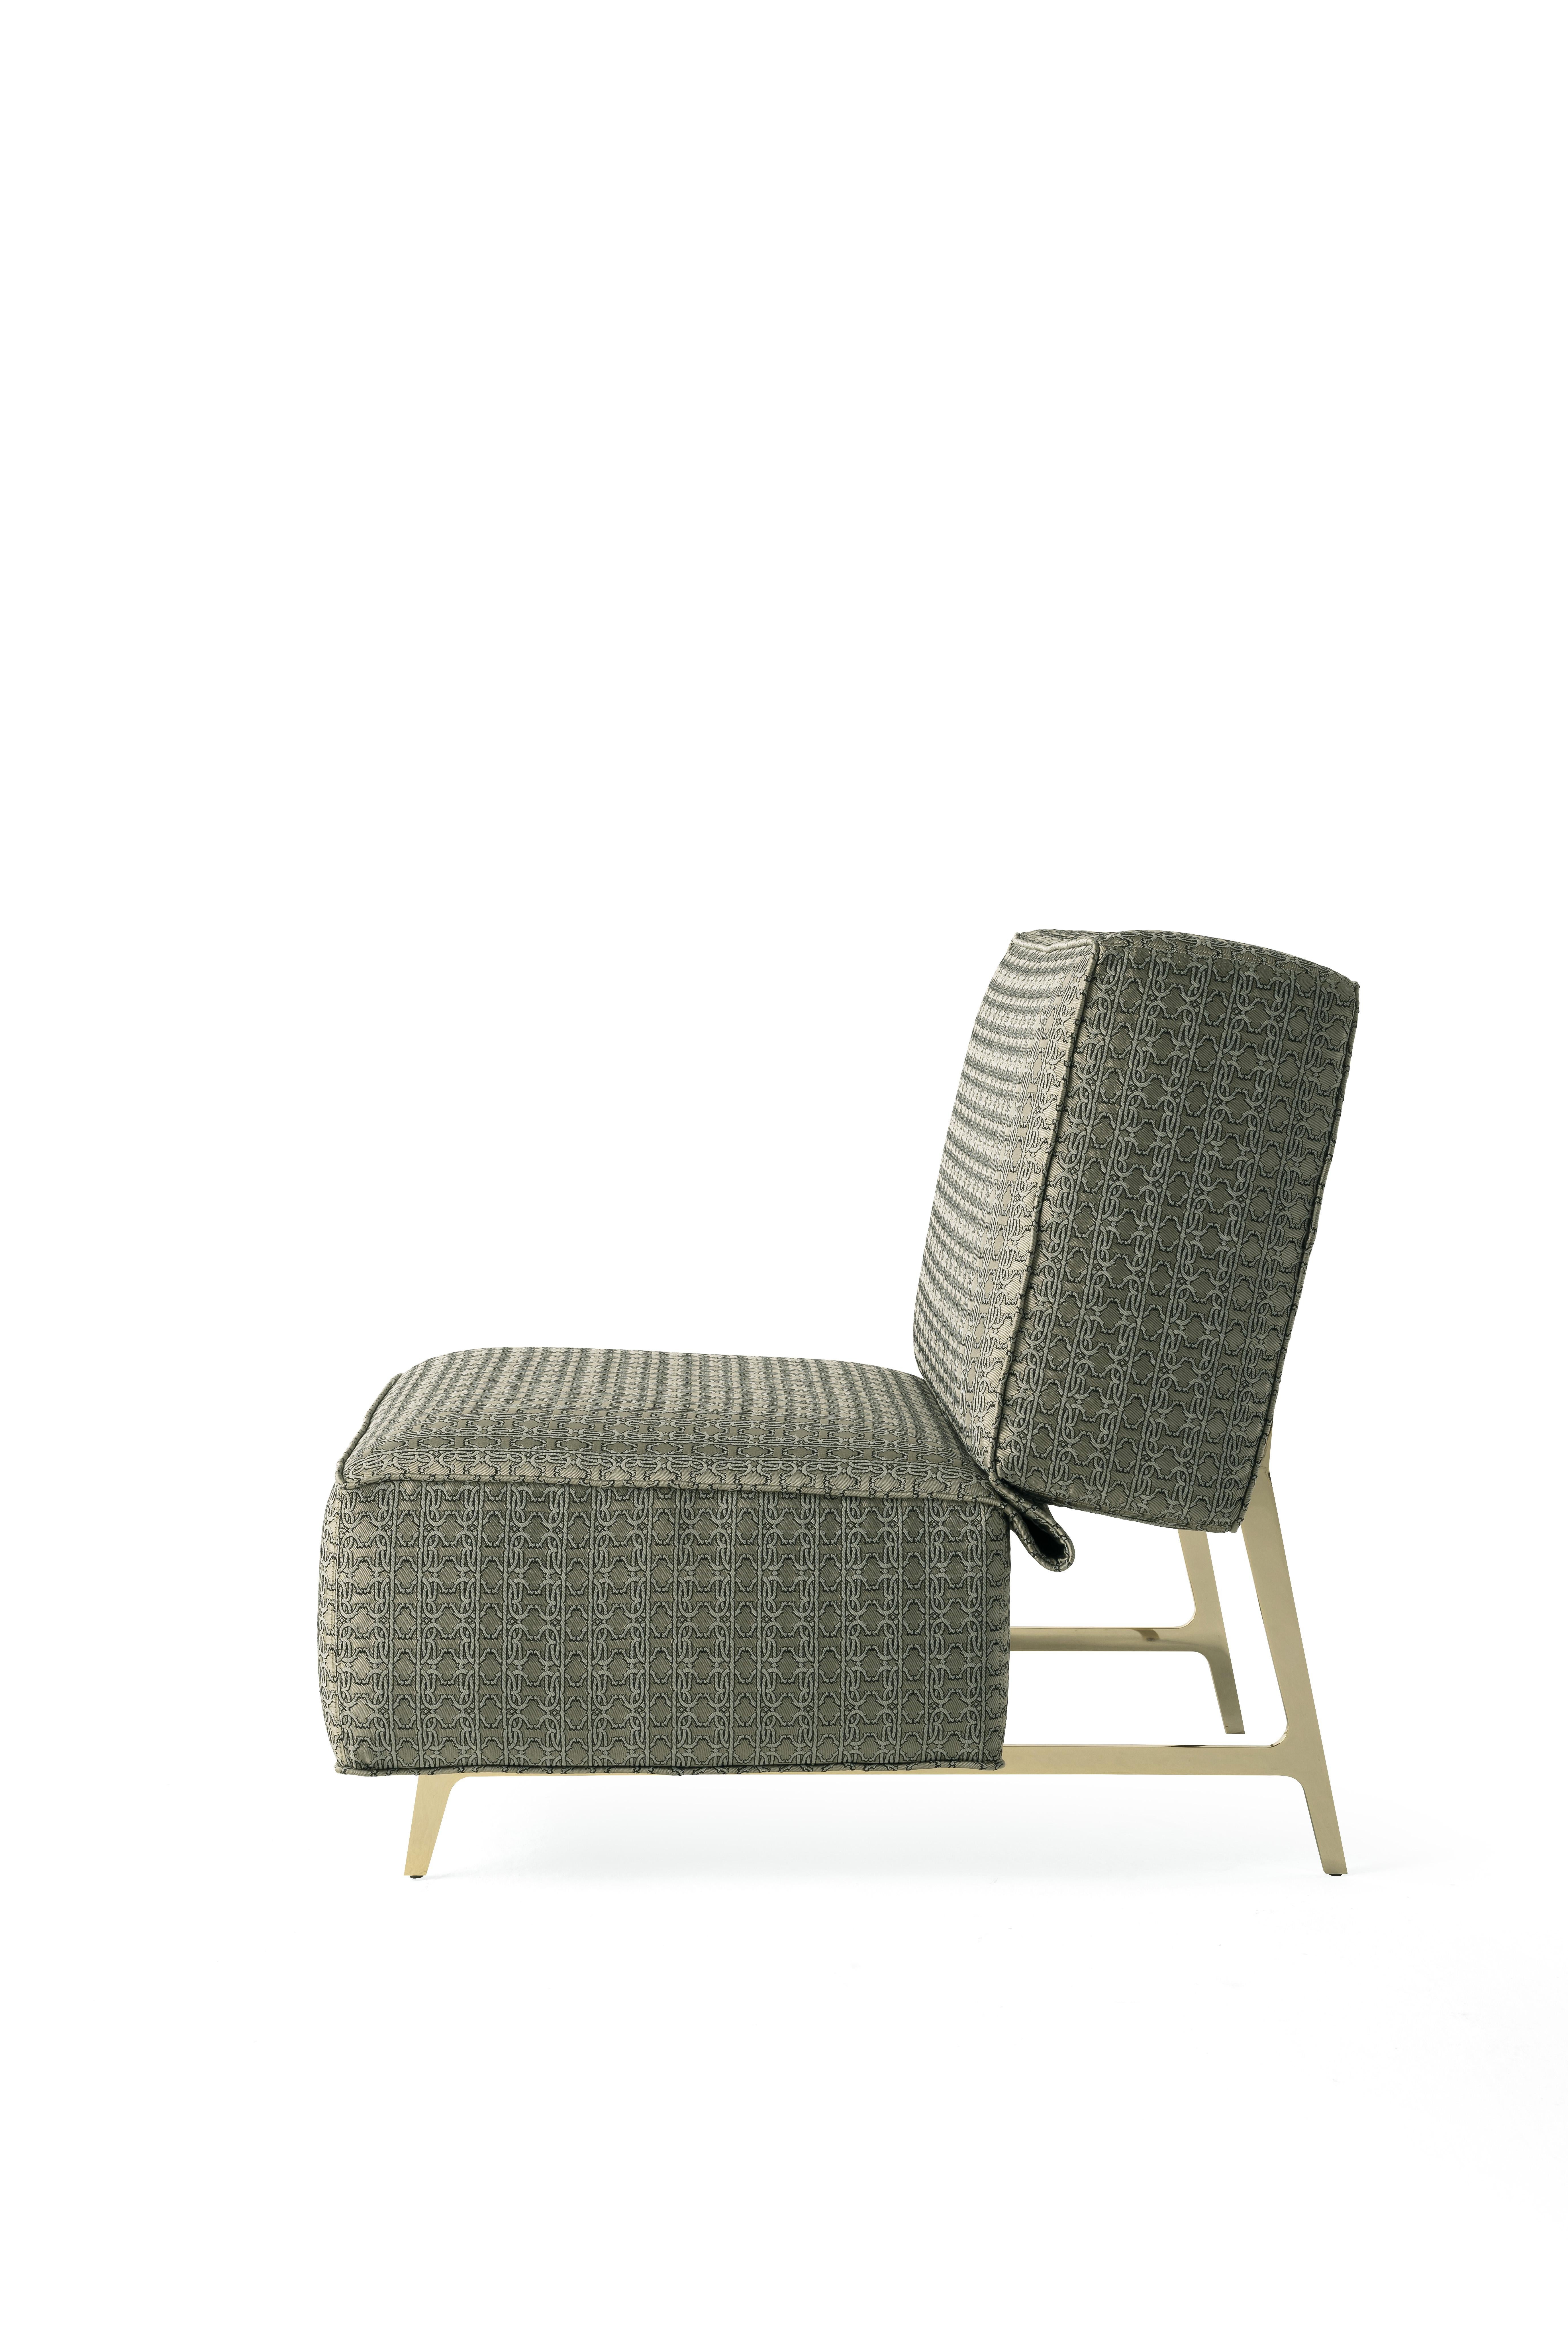 Modern 21st Century Davis Armchair in Monogram Fabric by Roberto Cavalli Home Interiors For Sale